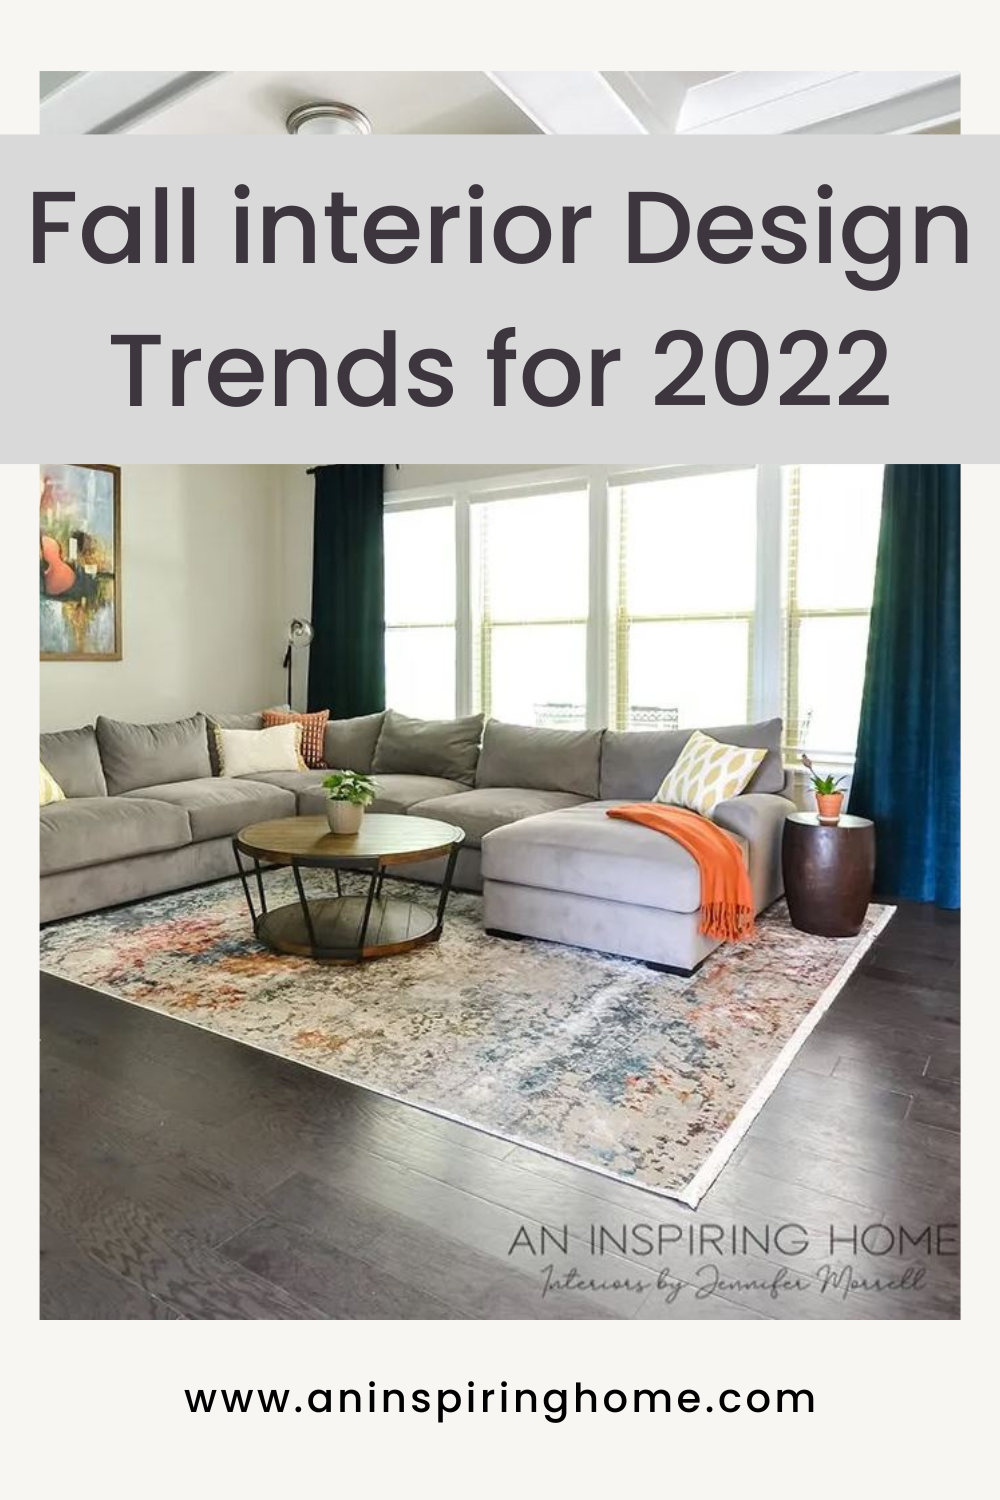 Fall Interior Design Trends for 2022